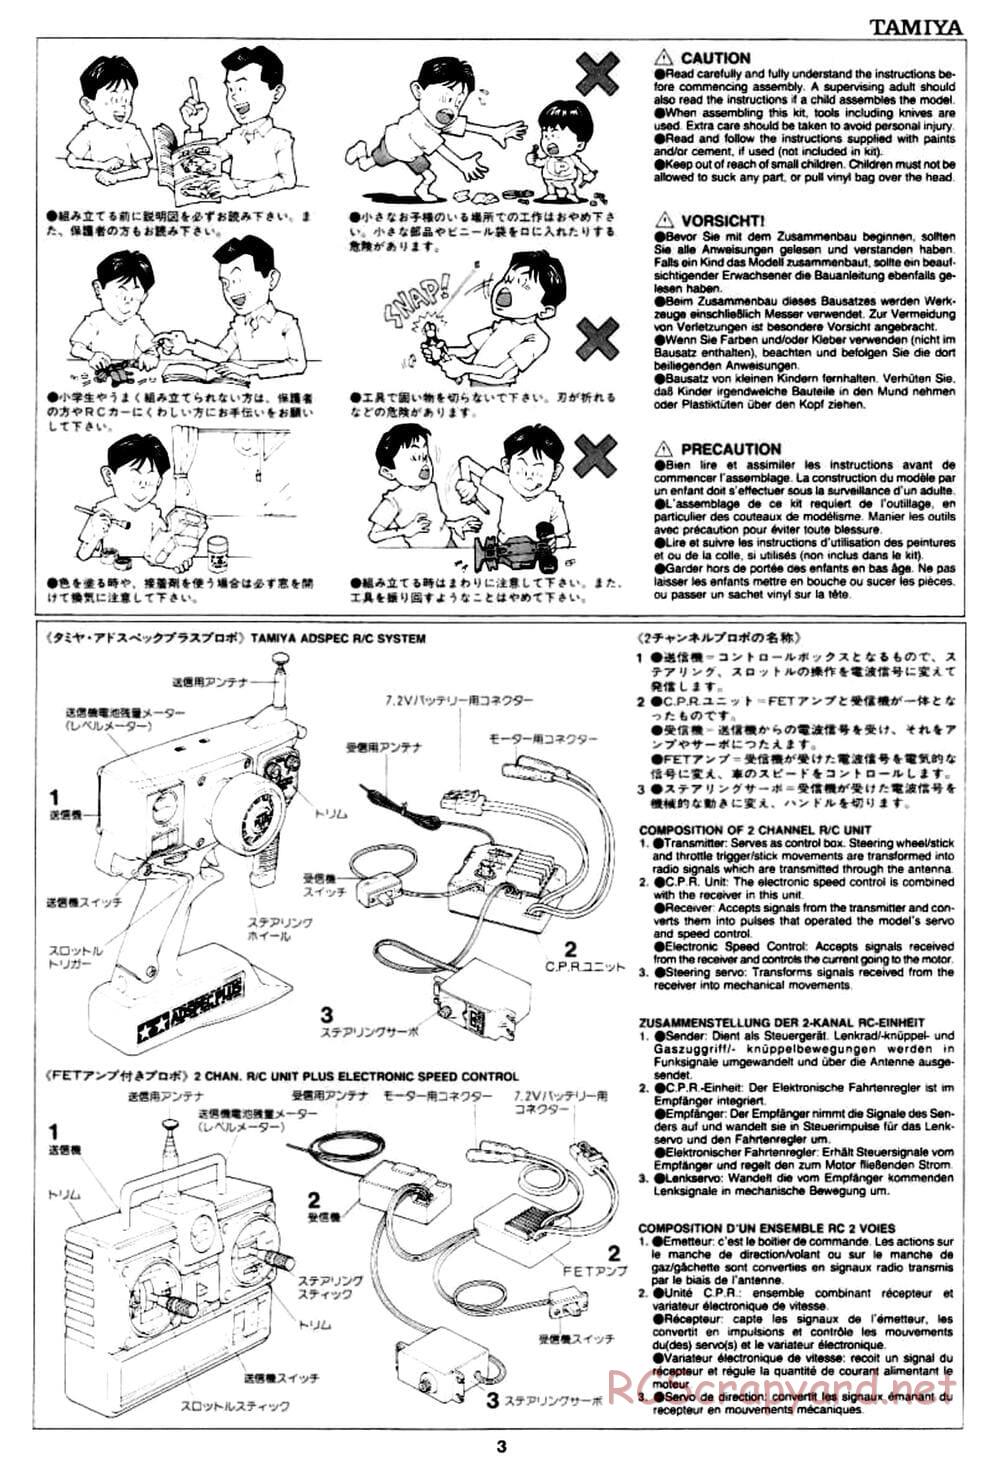 Tamiya - Mobil 1 NSX - TA-03R Chassis - Manual - Page 3